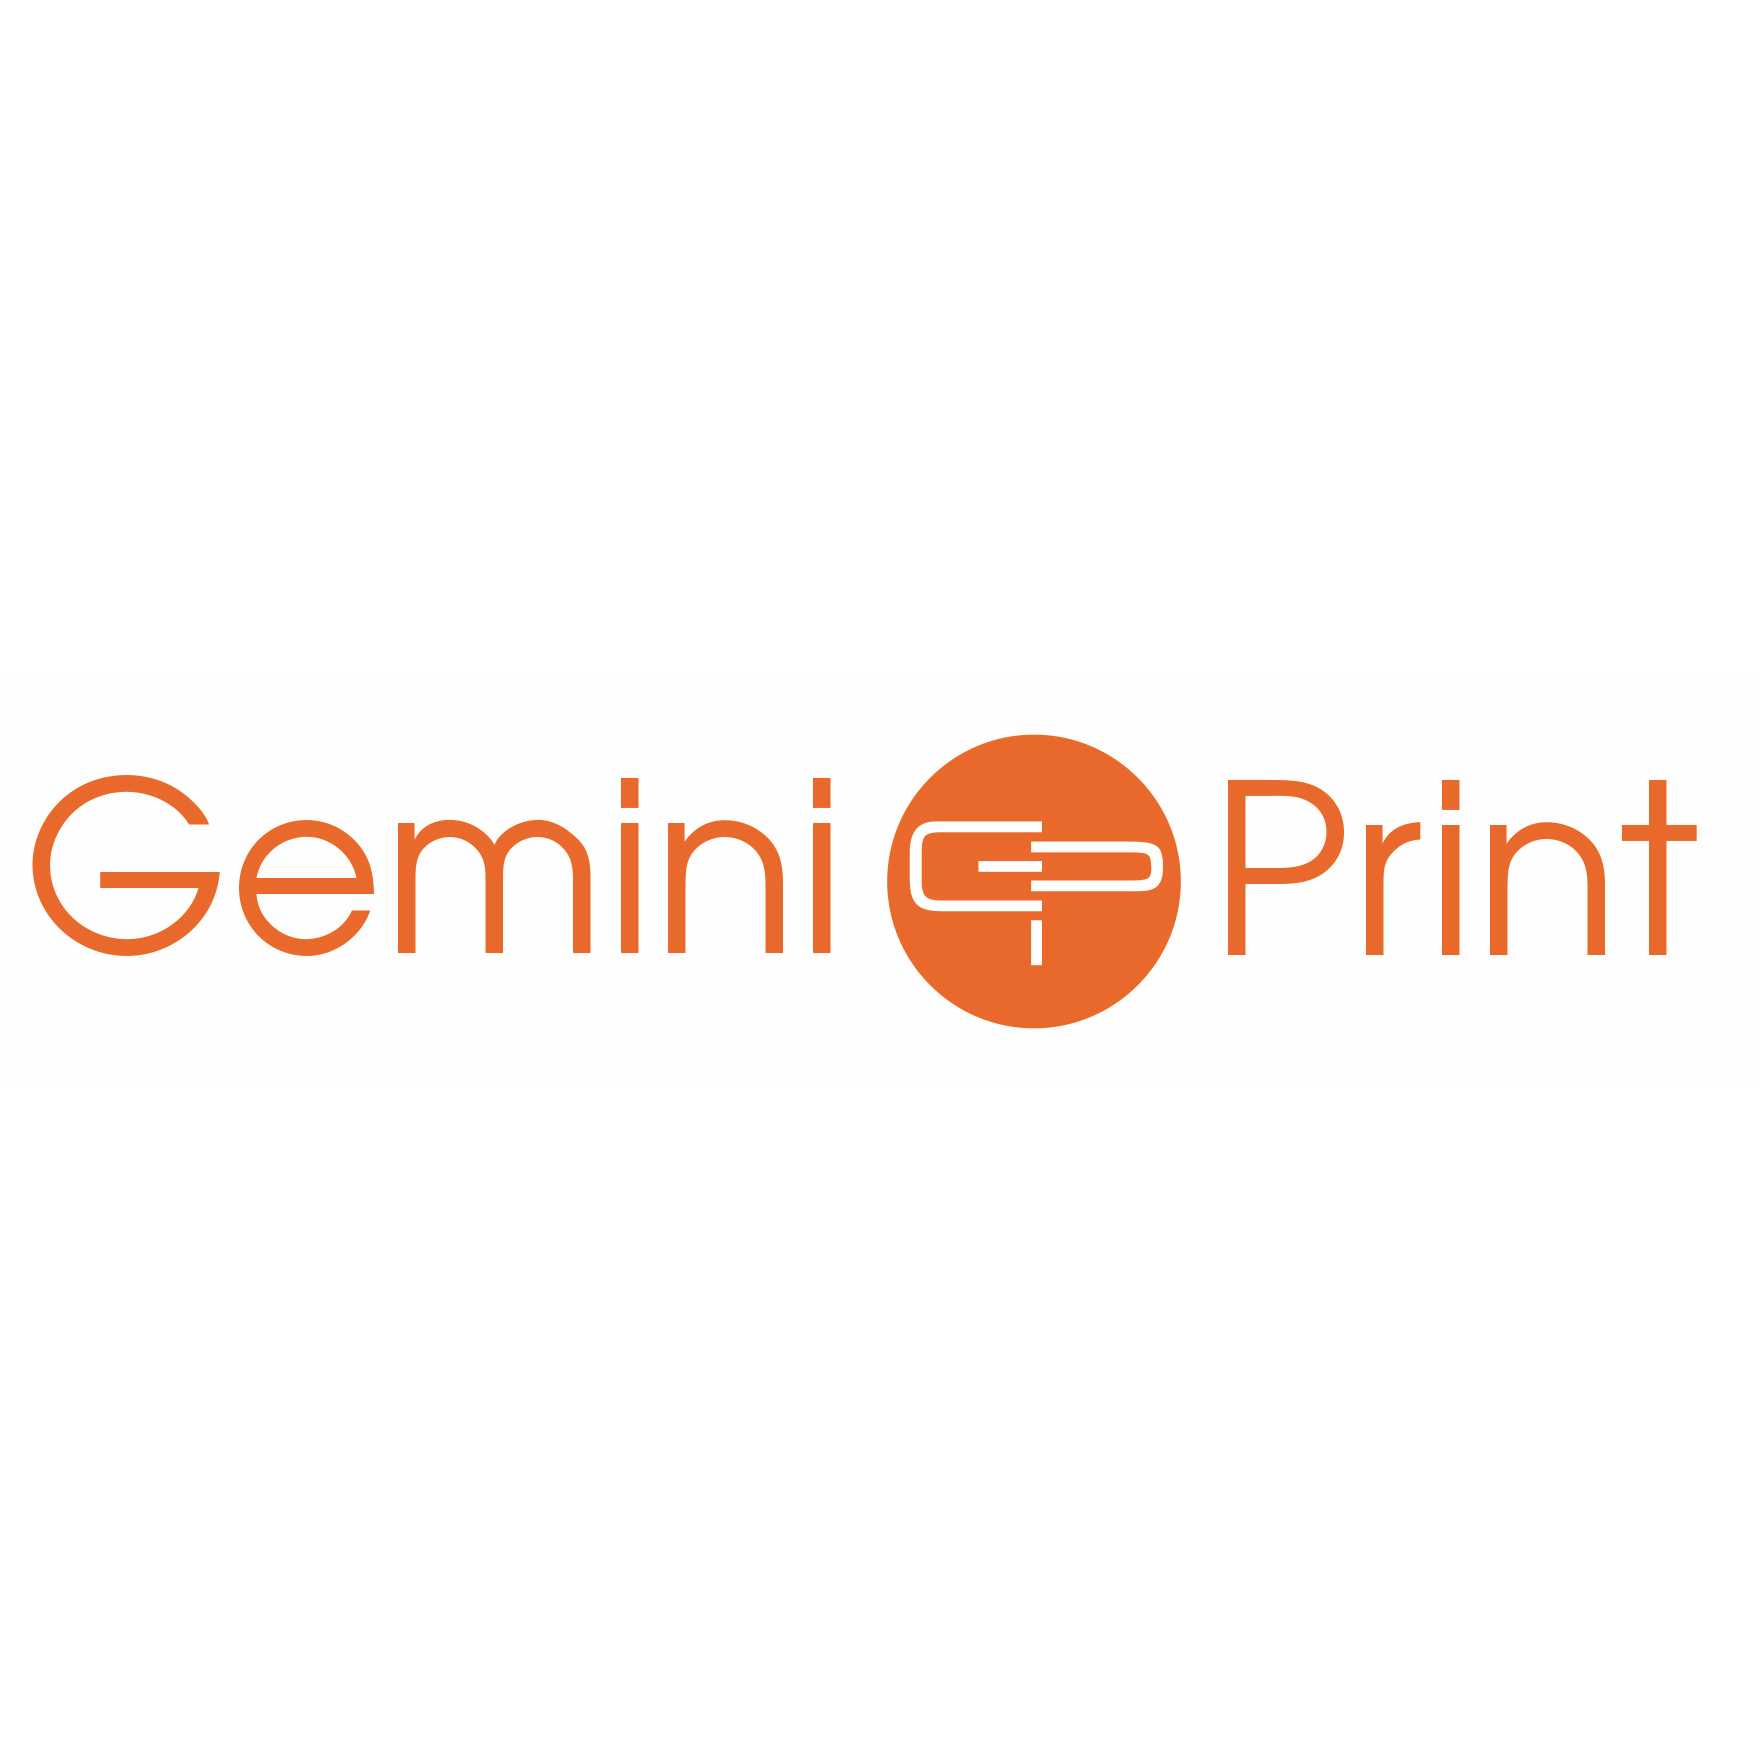 BHAC supporter - Gemini Print